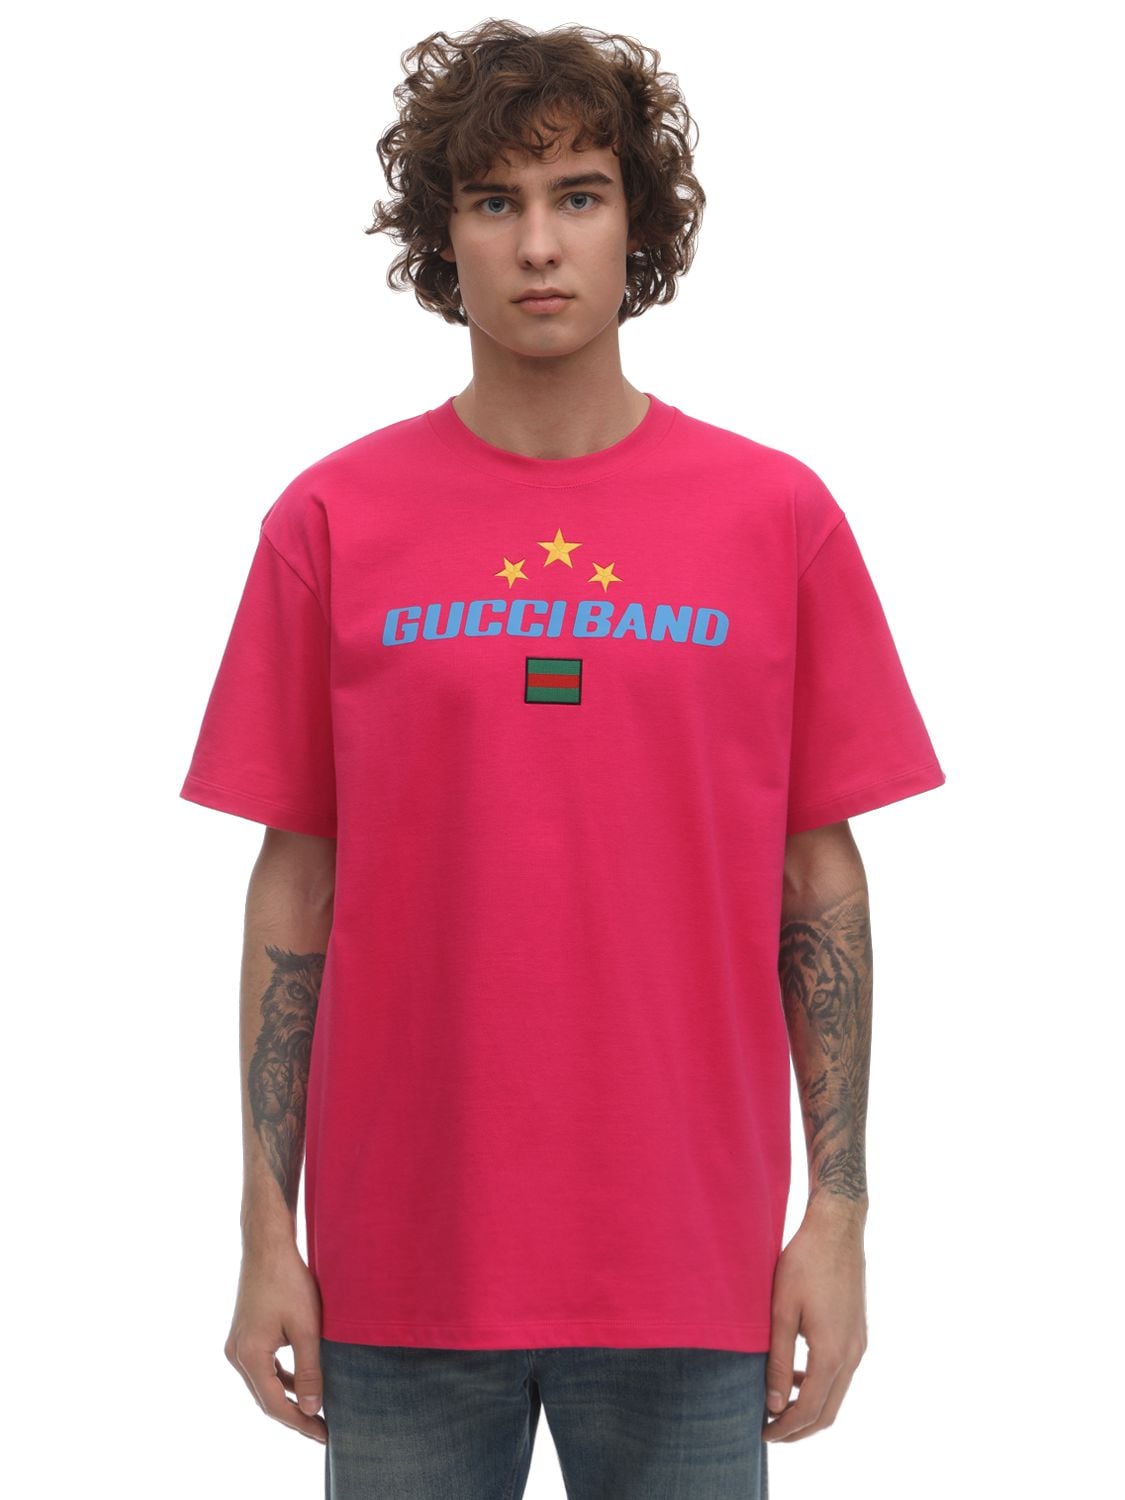 Gucci Band Cotton Jersey T-shirt | The Fashionisto